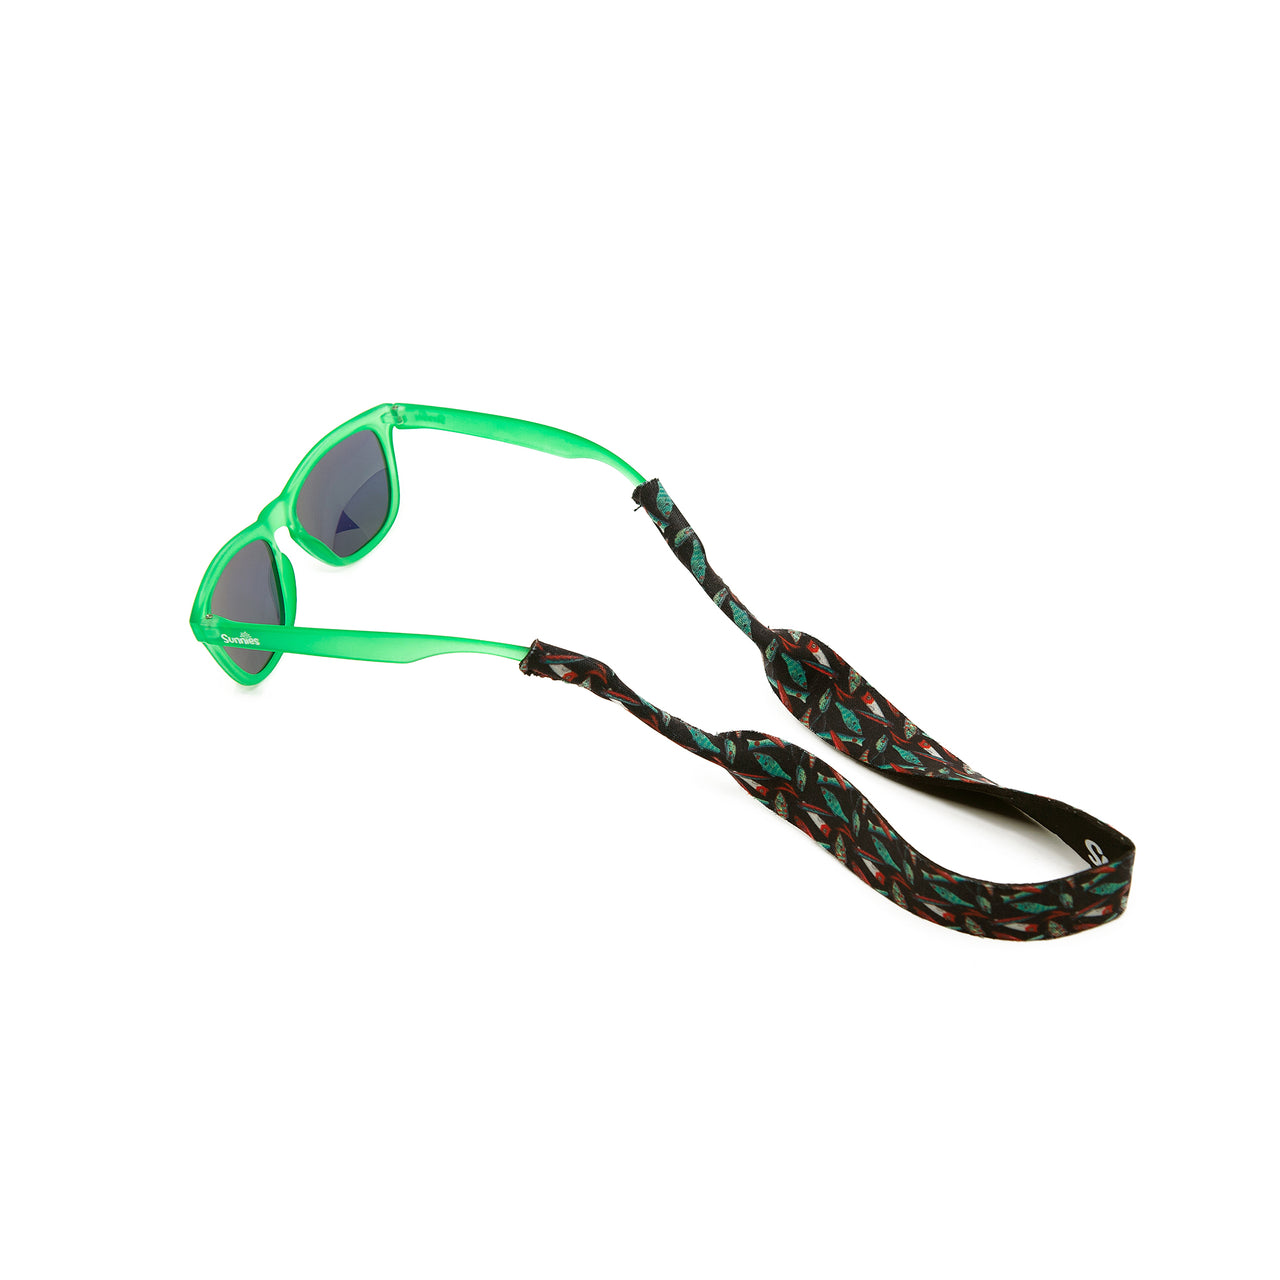 Fishing hooks sunglass leash for kids sunglasses in neoprene fabric